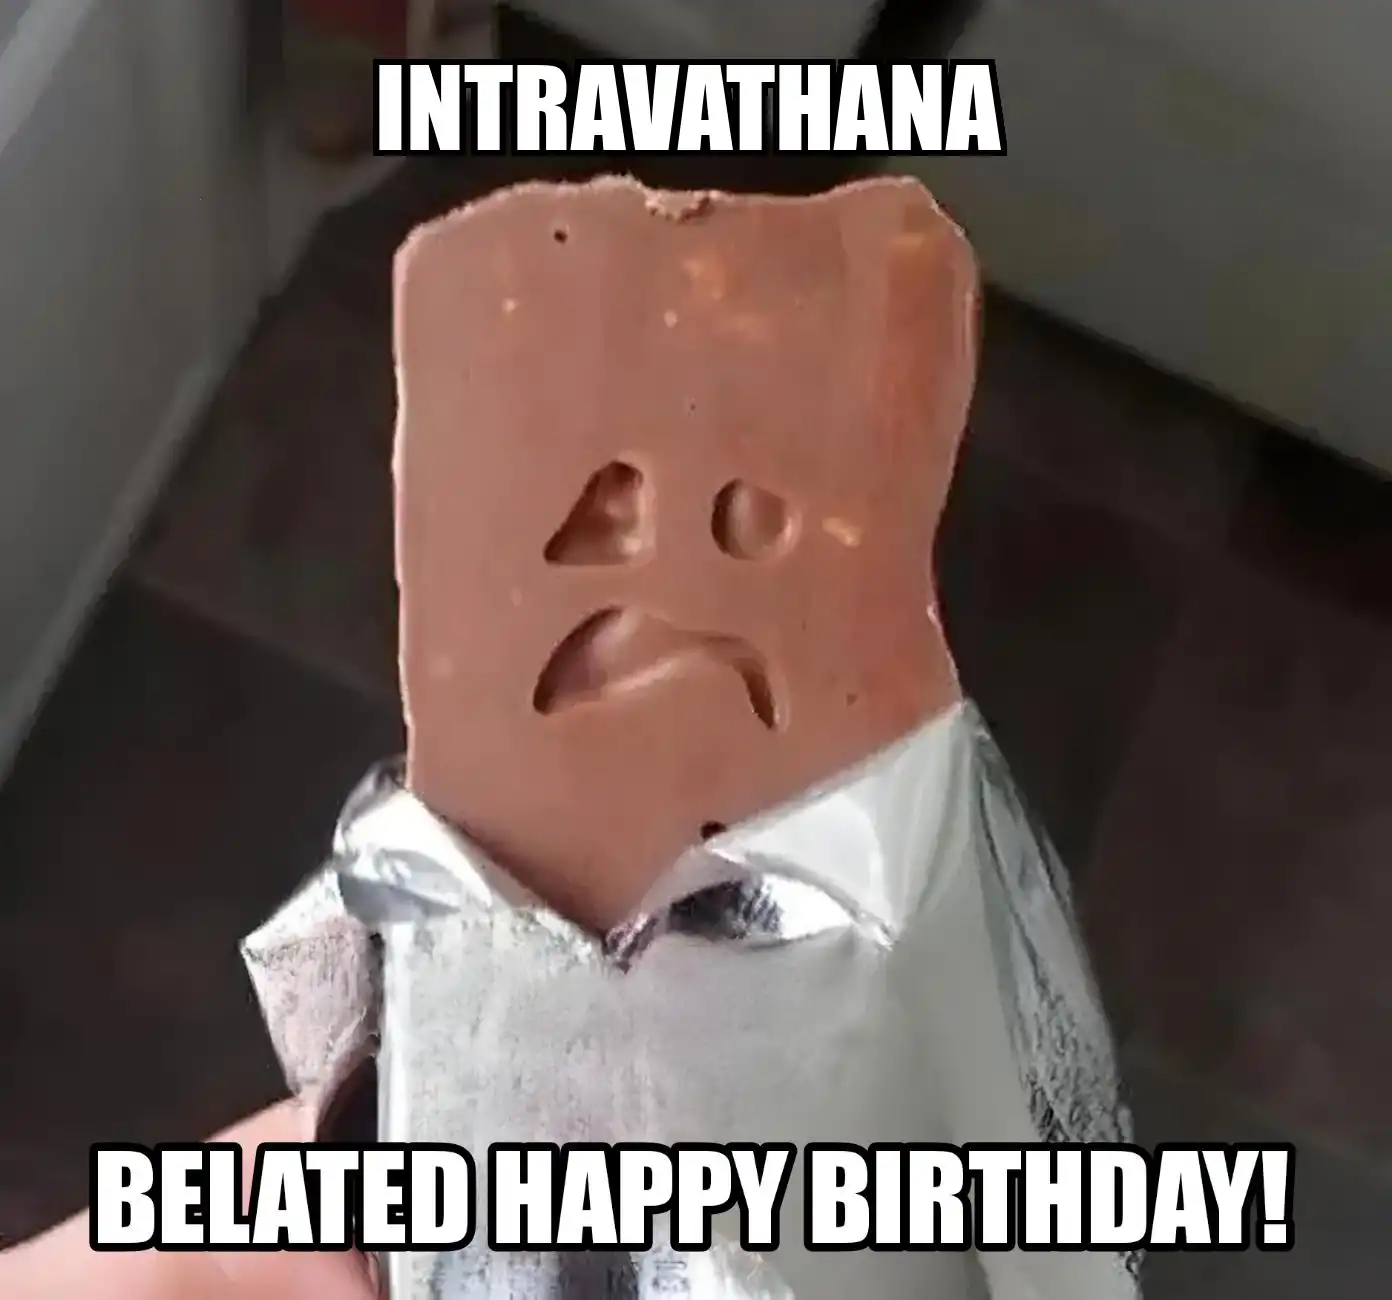 Happy Birthday Intravathana Belated Happy Birthday Meme